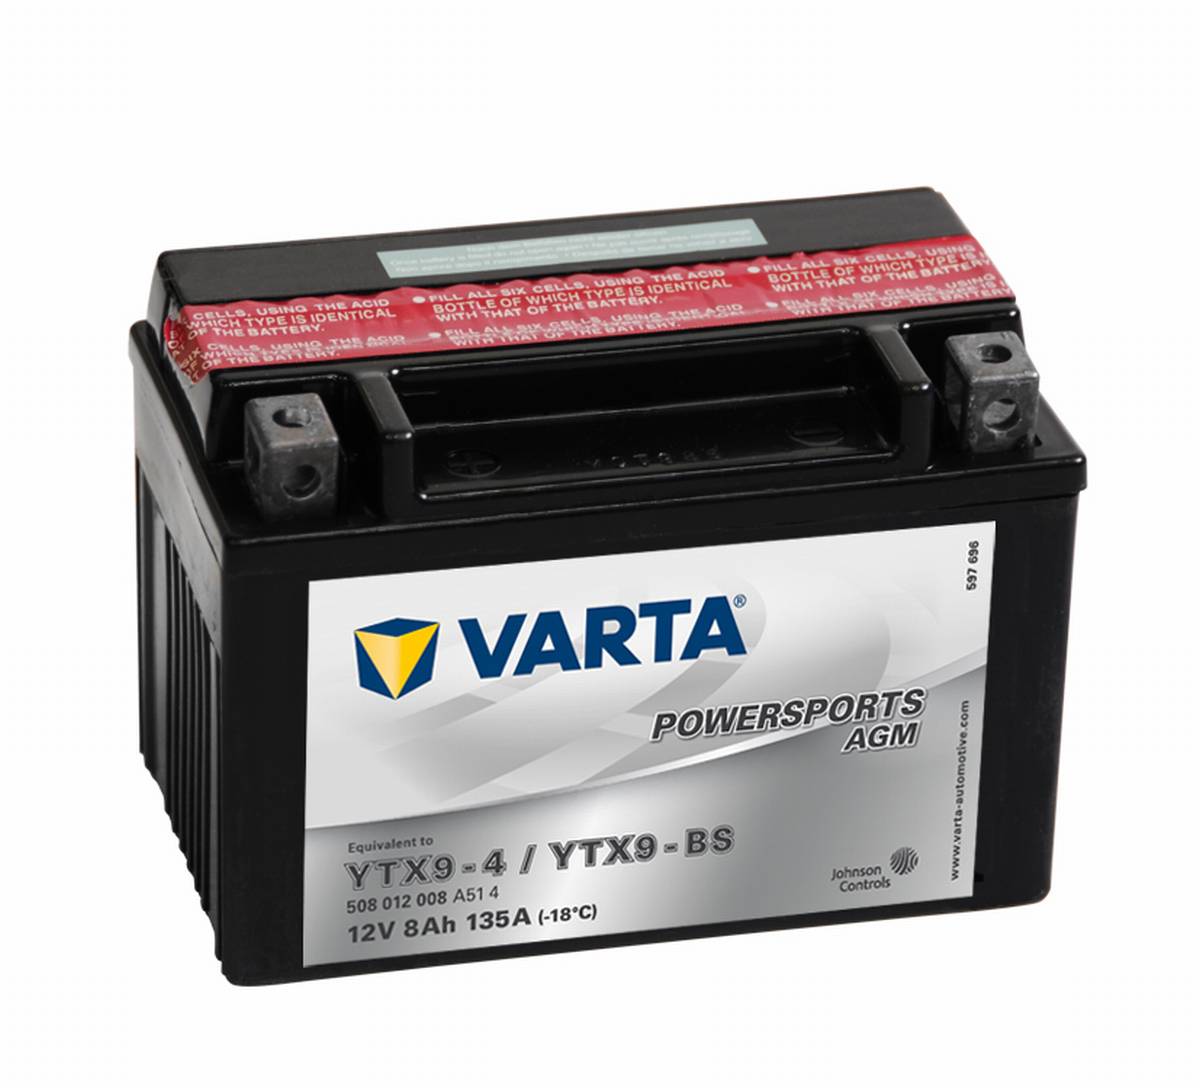 Varta Powersports AGM YTX9-4 Batteria moto YTX9-BS 508012008 12V 8Ah 135A